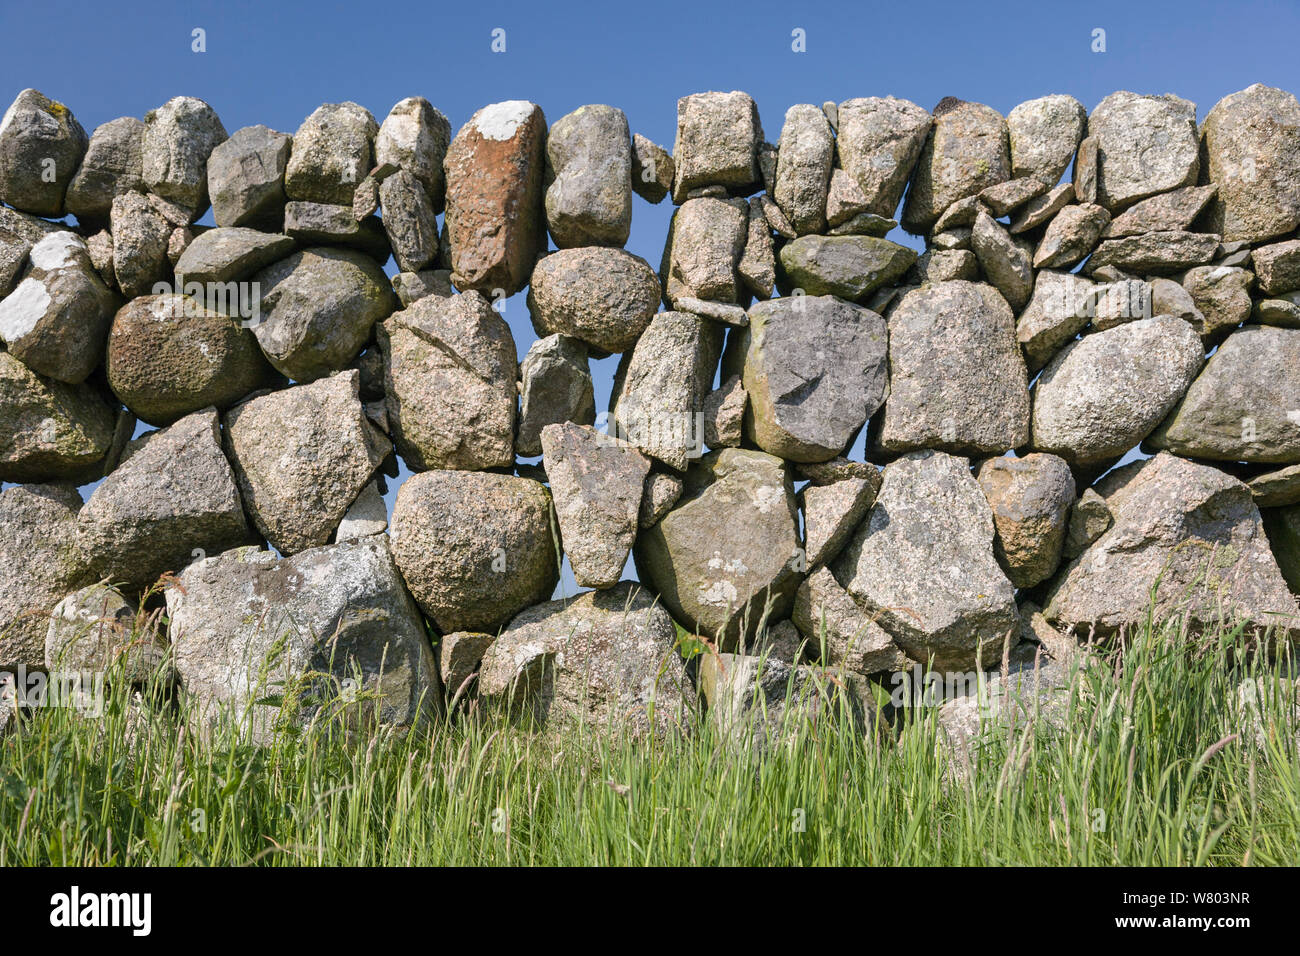 Muro de rocas de granito, Isle Of Mull, Hébridas, Escocia, Reino Unido, junio. Foto de stock